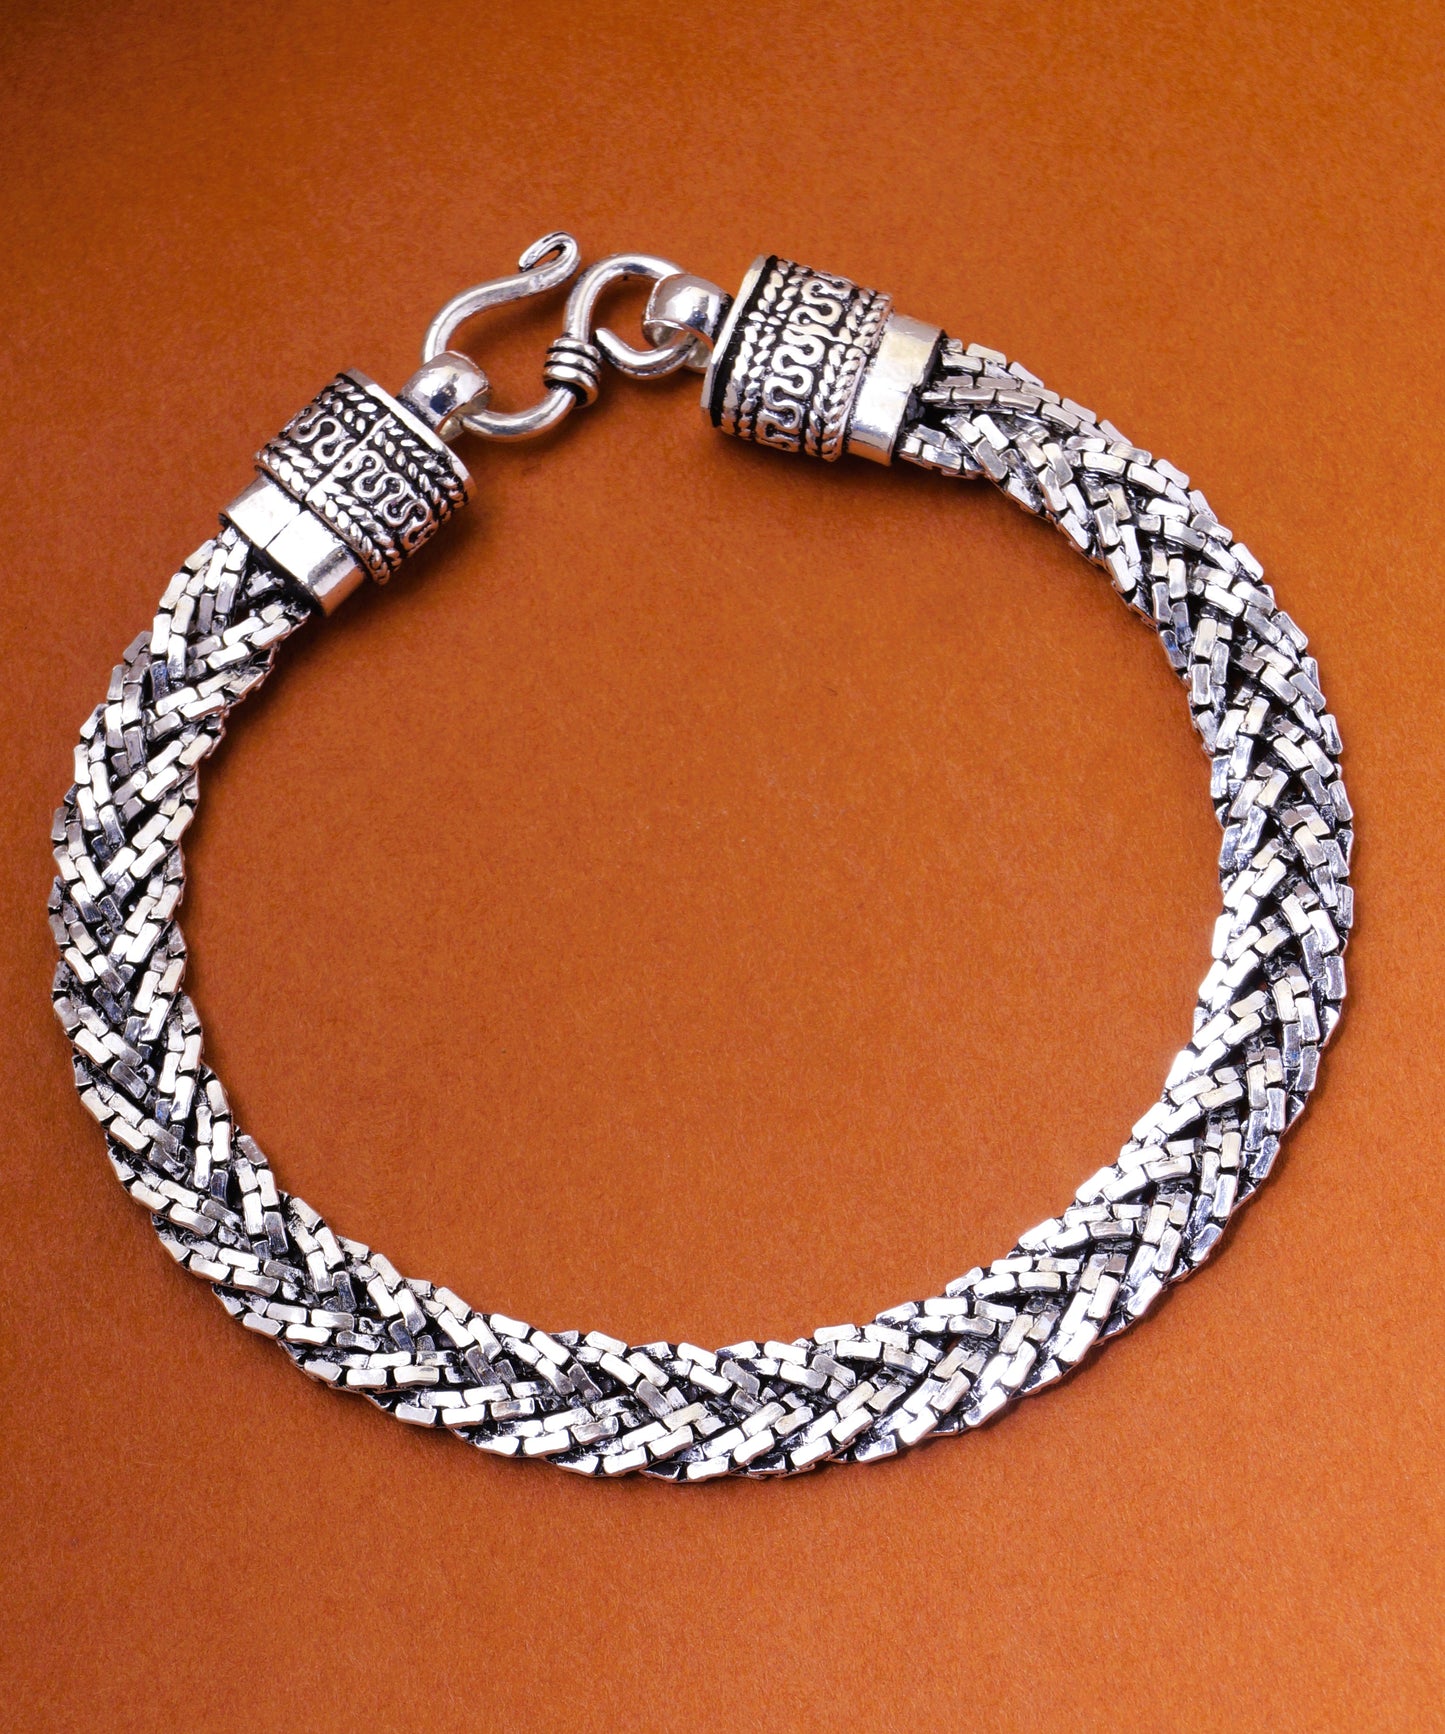 Oxidized Bracelet men